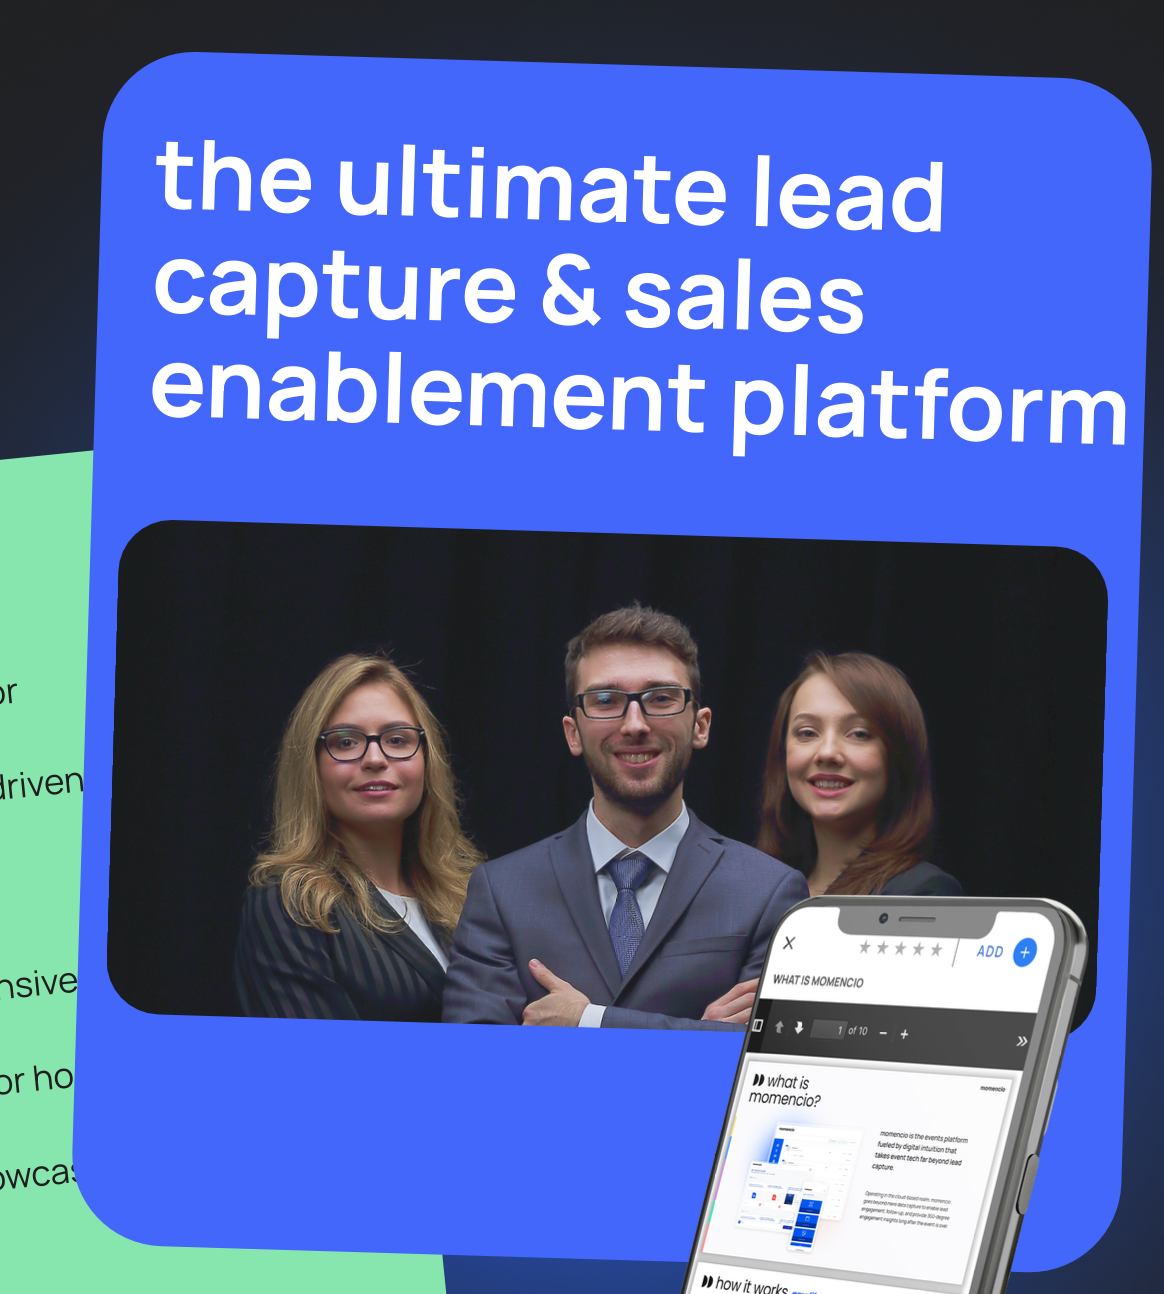 The Ultimate Lead Capture & Sales Enablement Platform